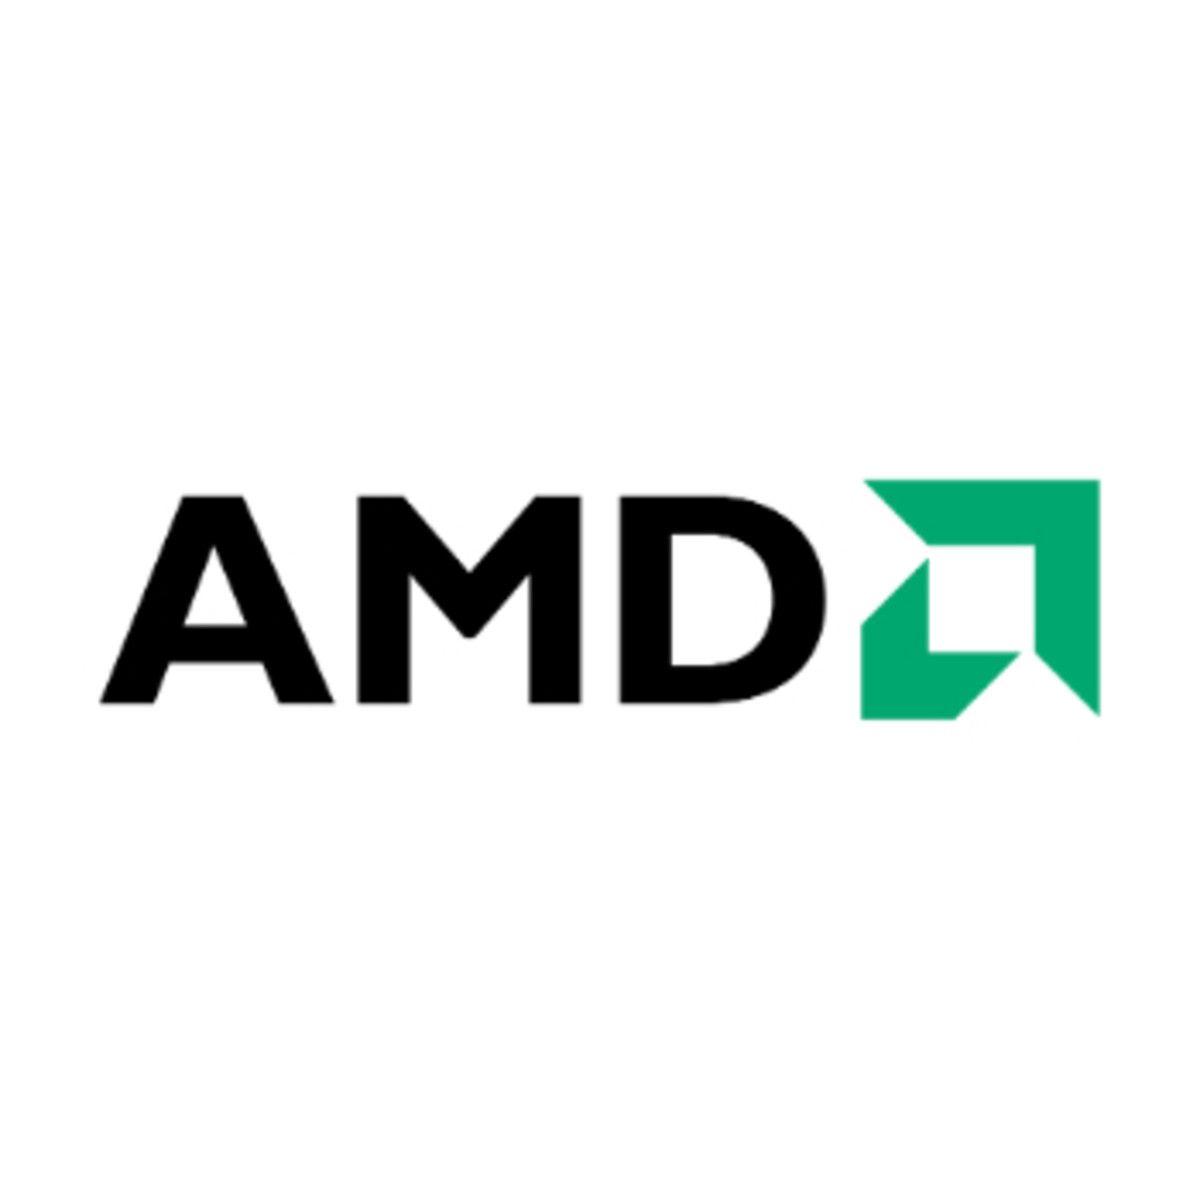 AMDA Logo - AMD acquires Nitero wireless VR IP - PC Retail